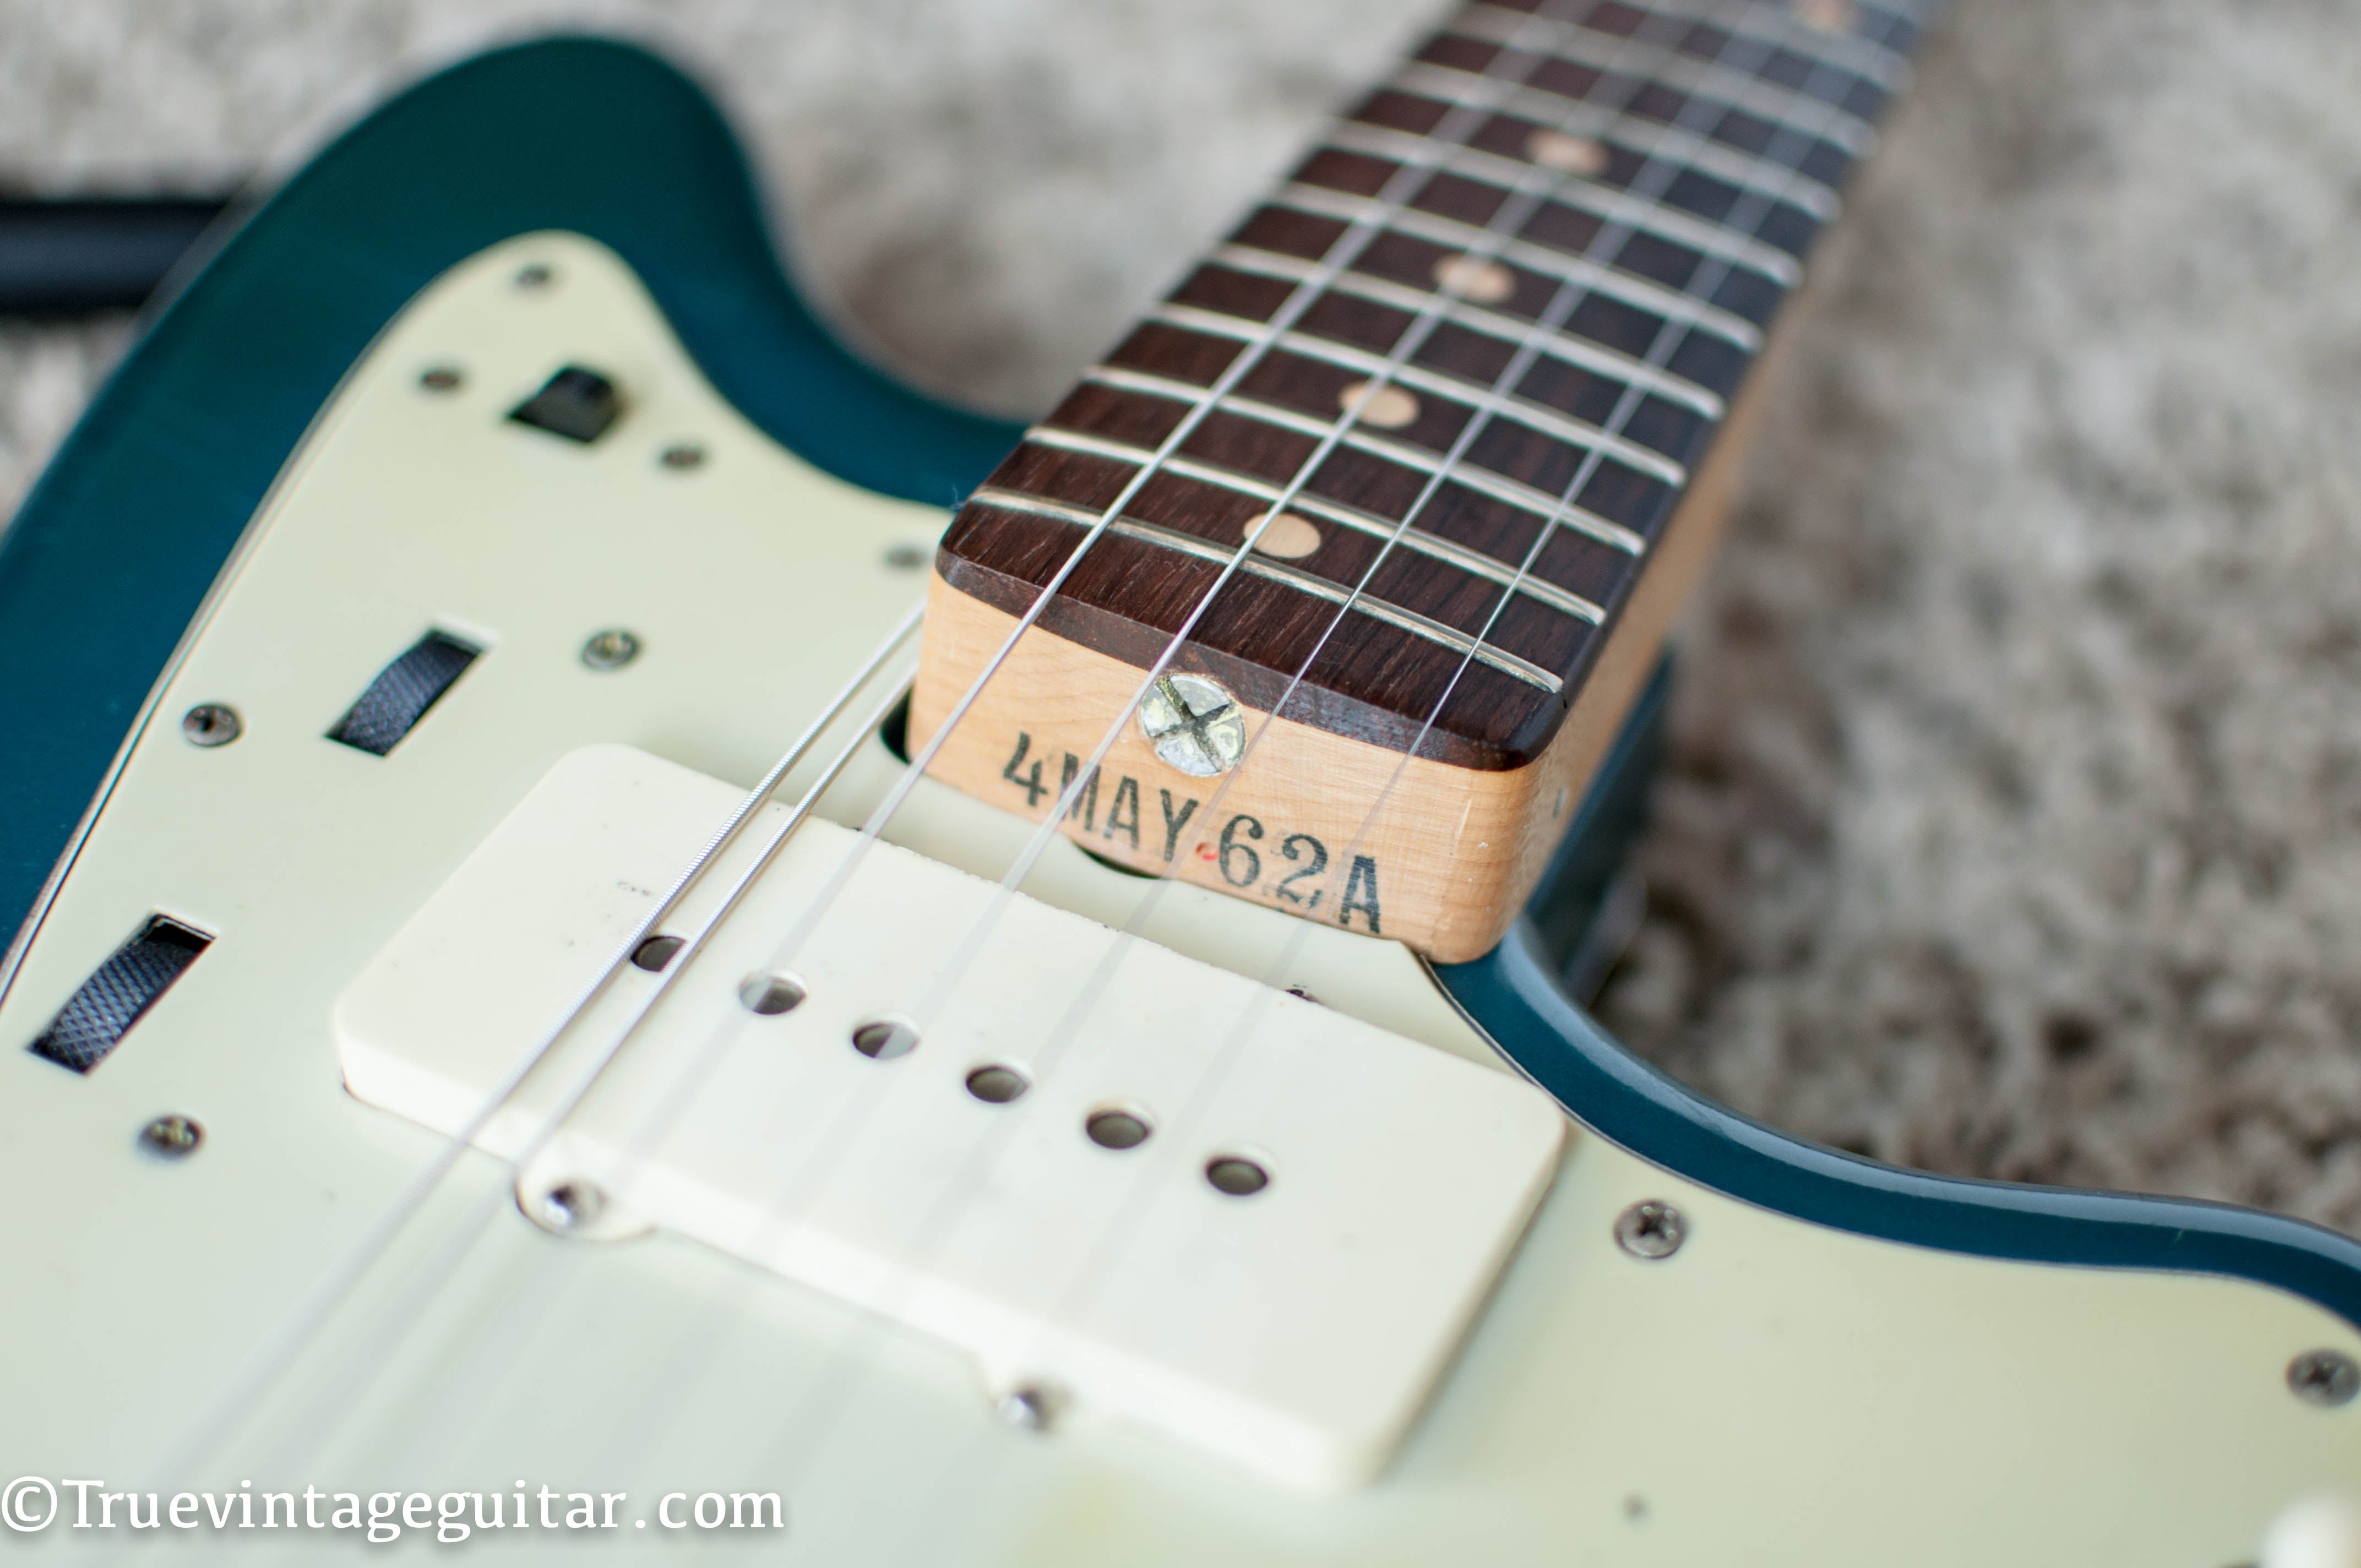 Fender Pro Amp 1962 Brown Tolex – Guitar Gallery of Alabama